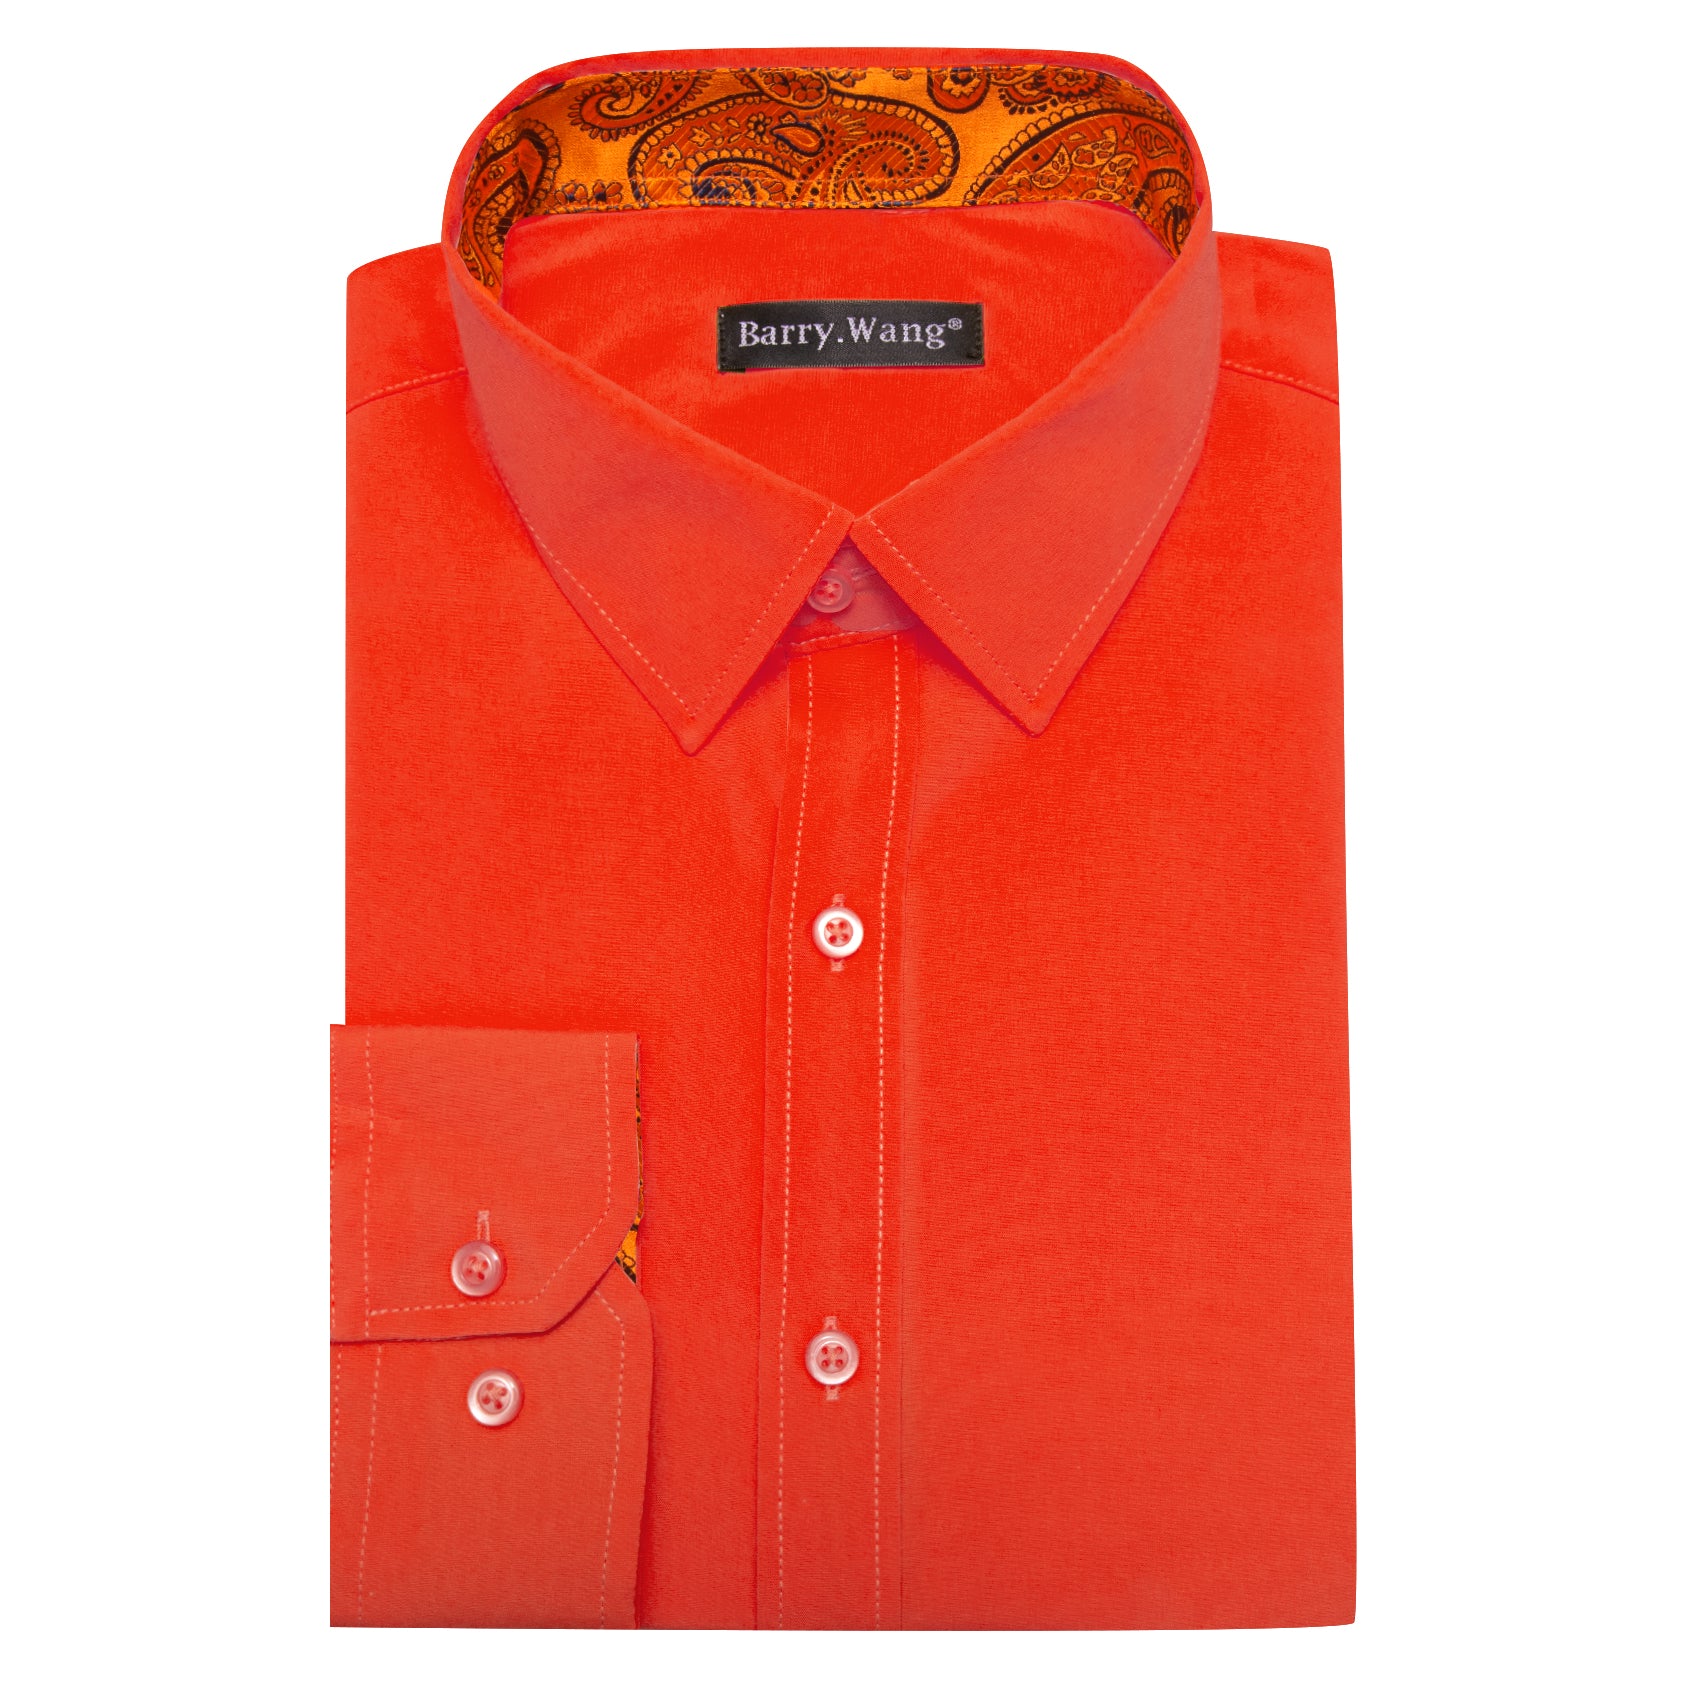 Barry Wang Formal OrangeRed Chocolate Splicing Men's Business Shirt